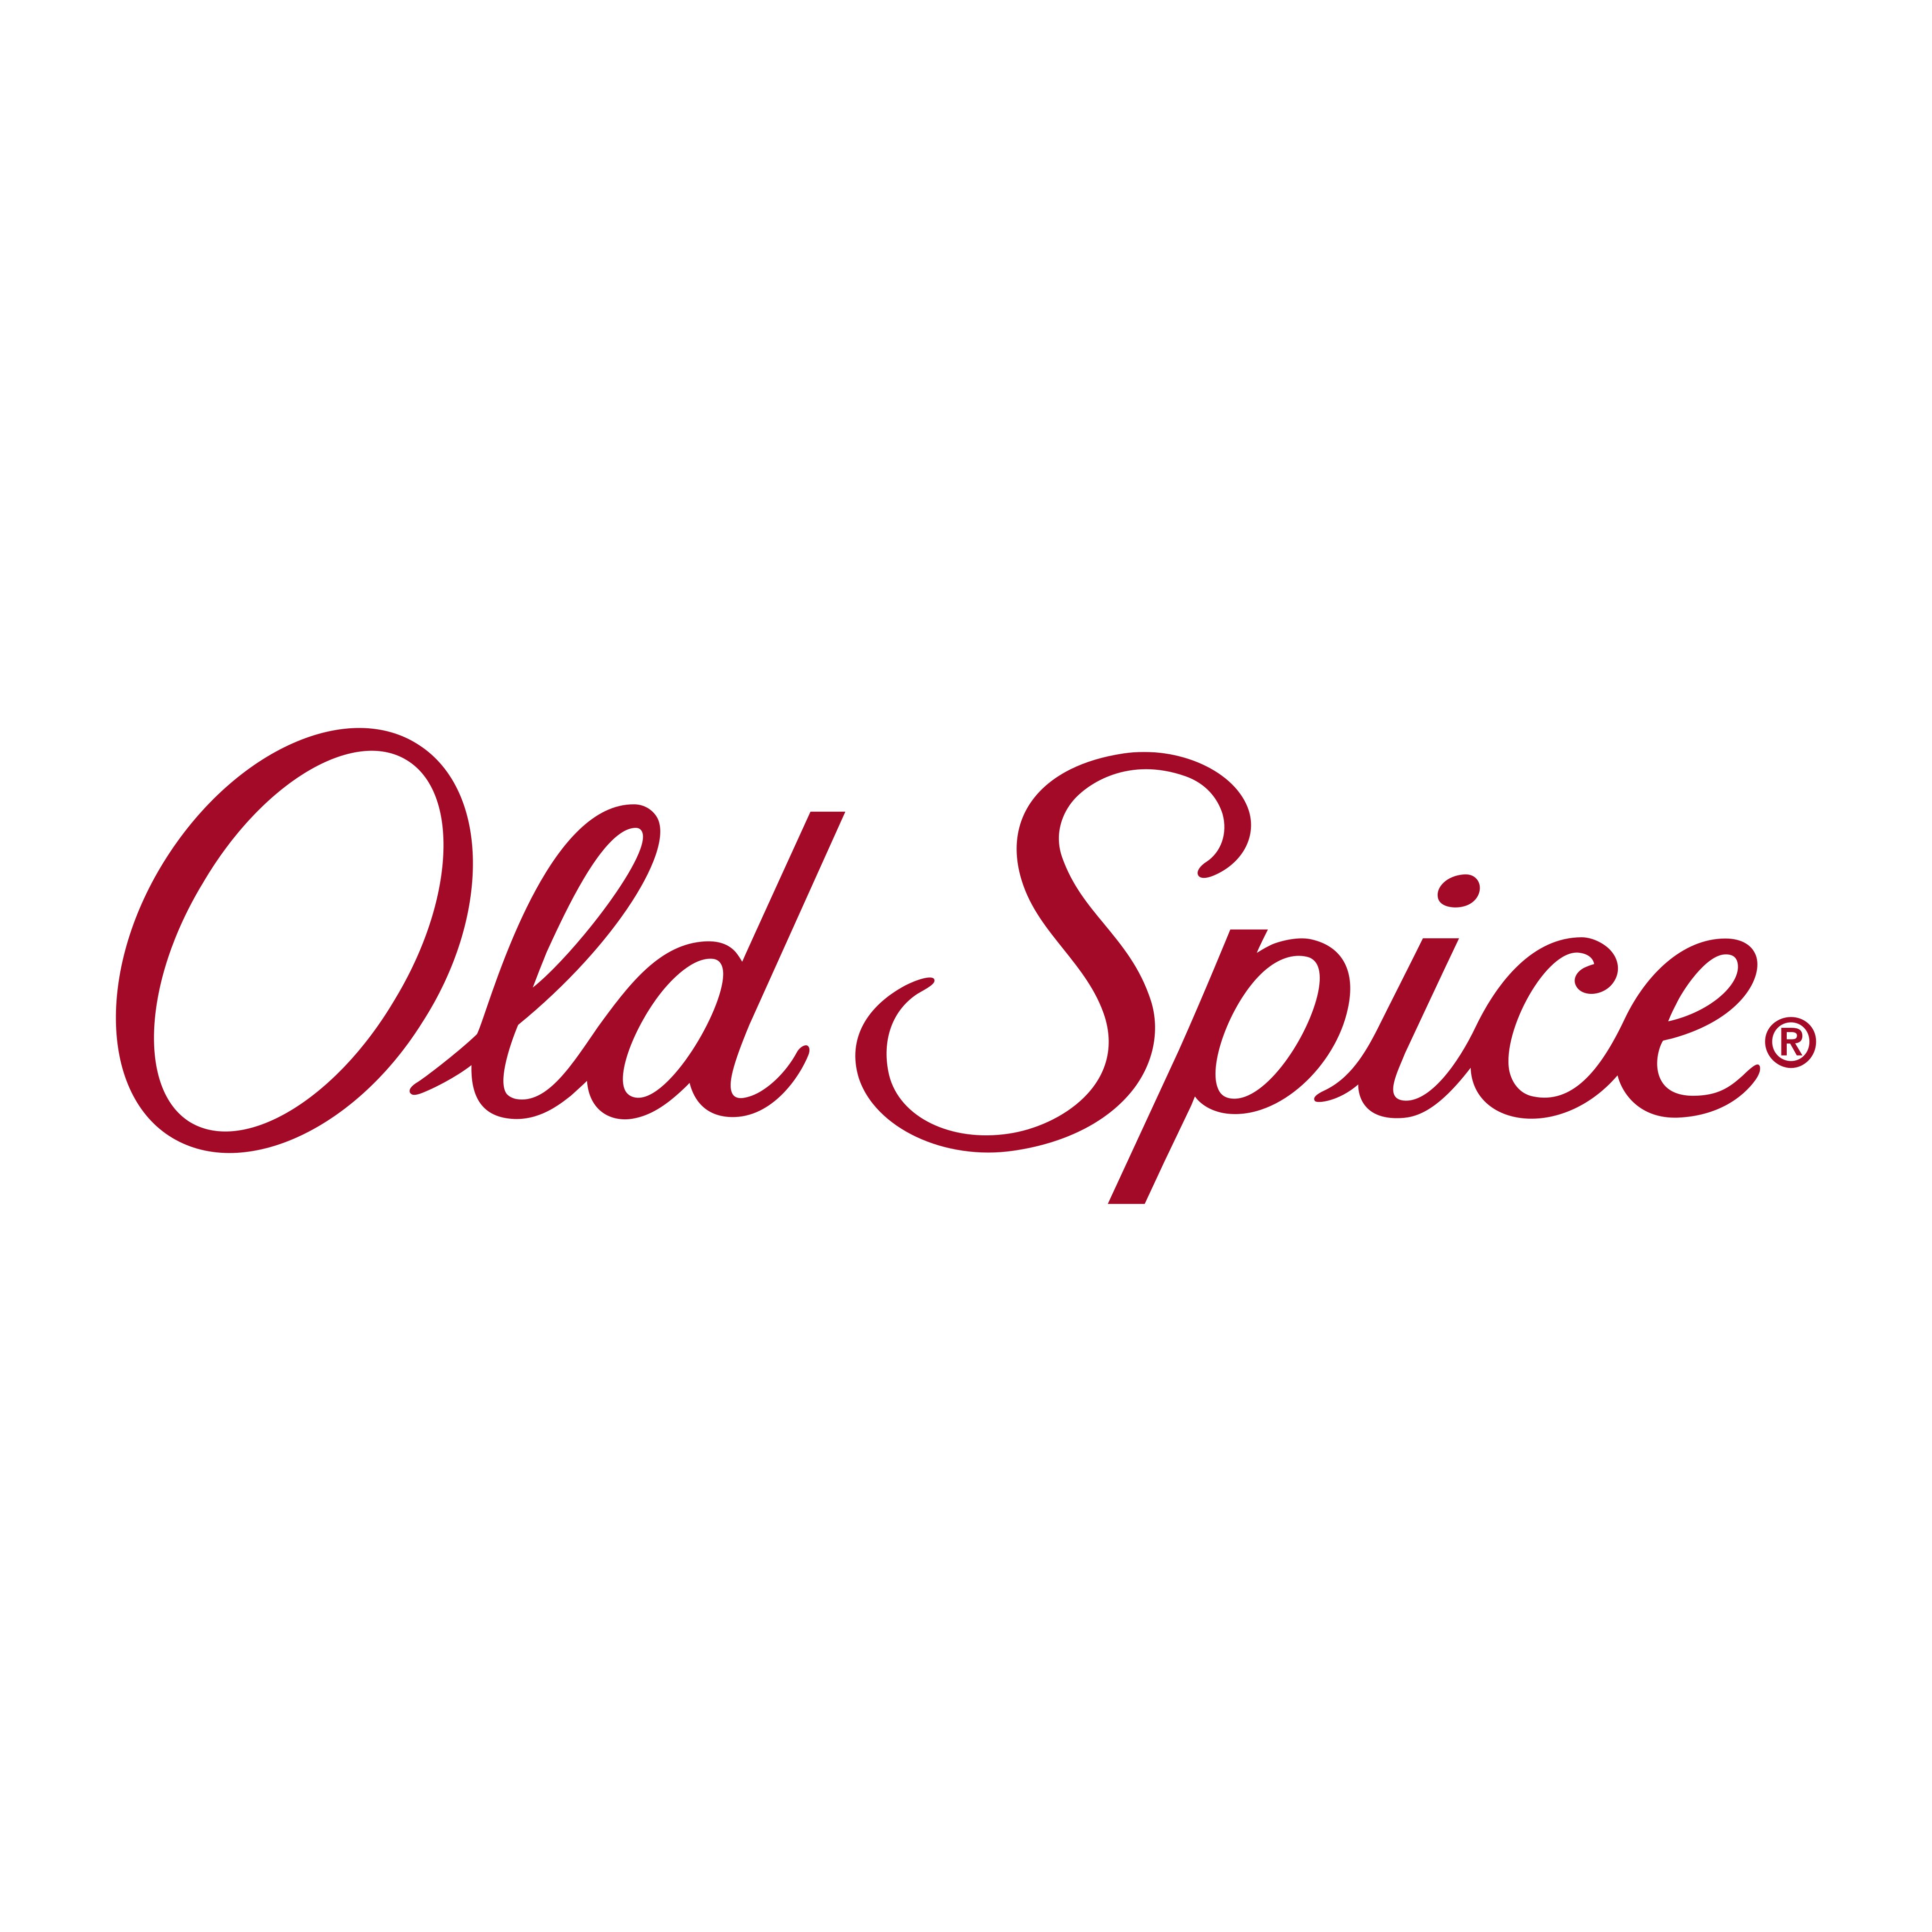 oldspice logo 0 - Old Spice Logo